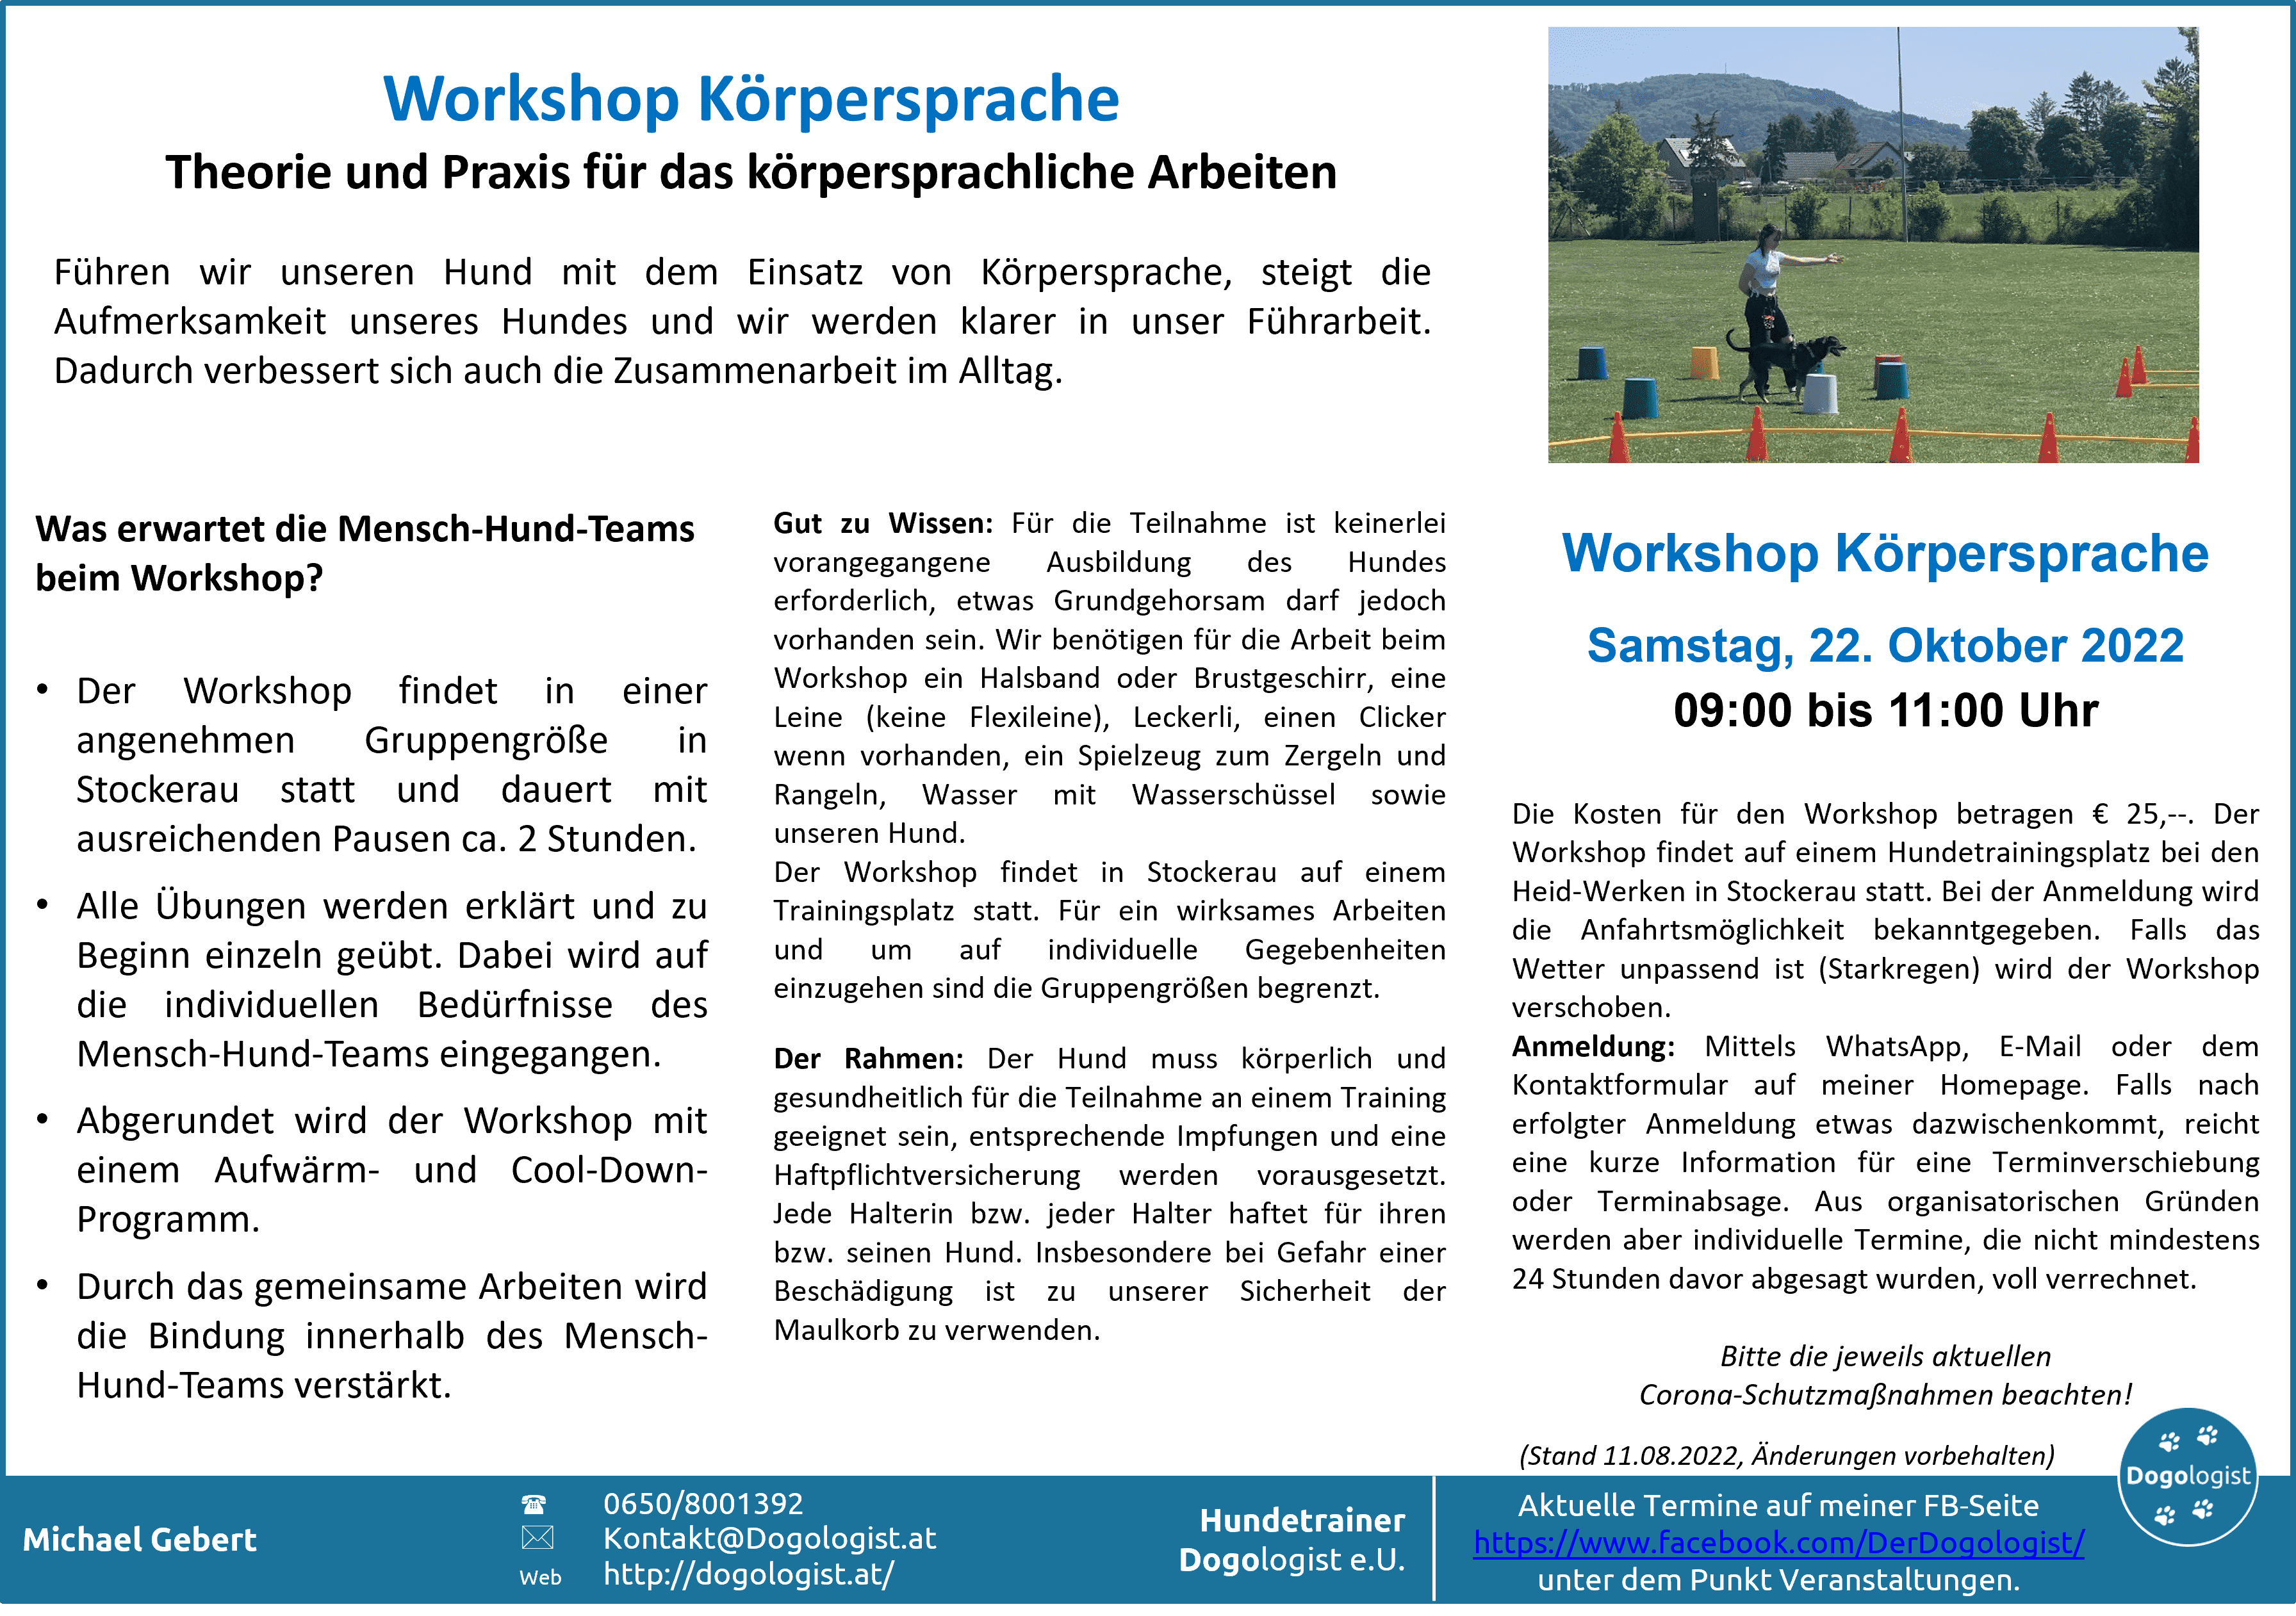 Workshop Körpersprache am Samstag, dem 22. Oktober 2022